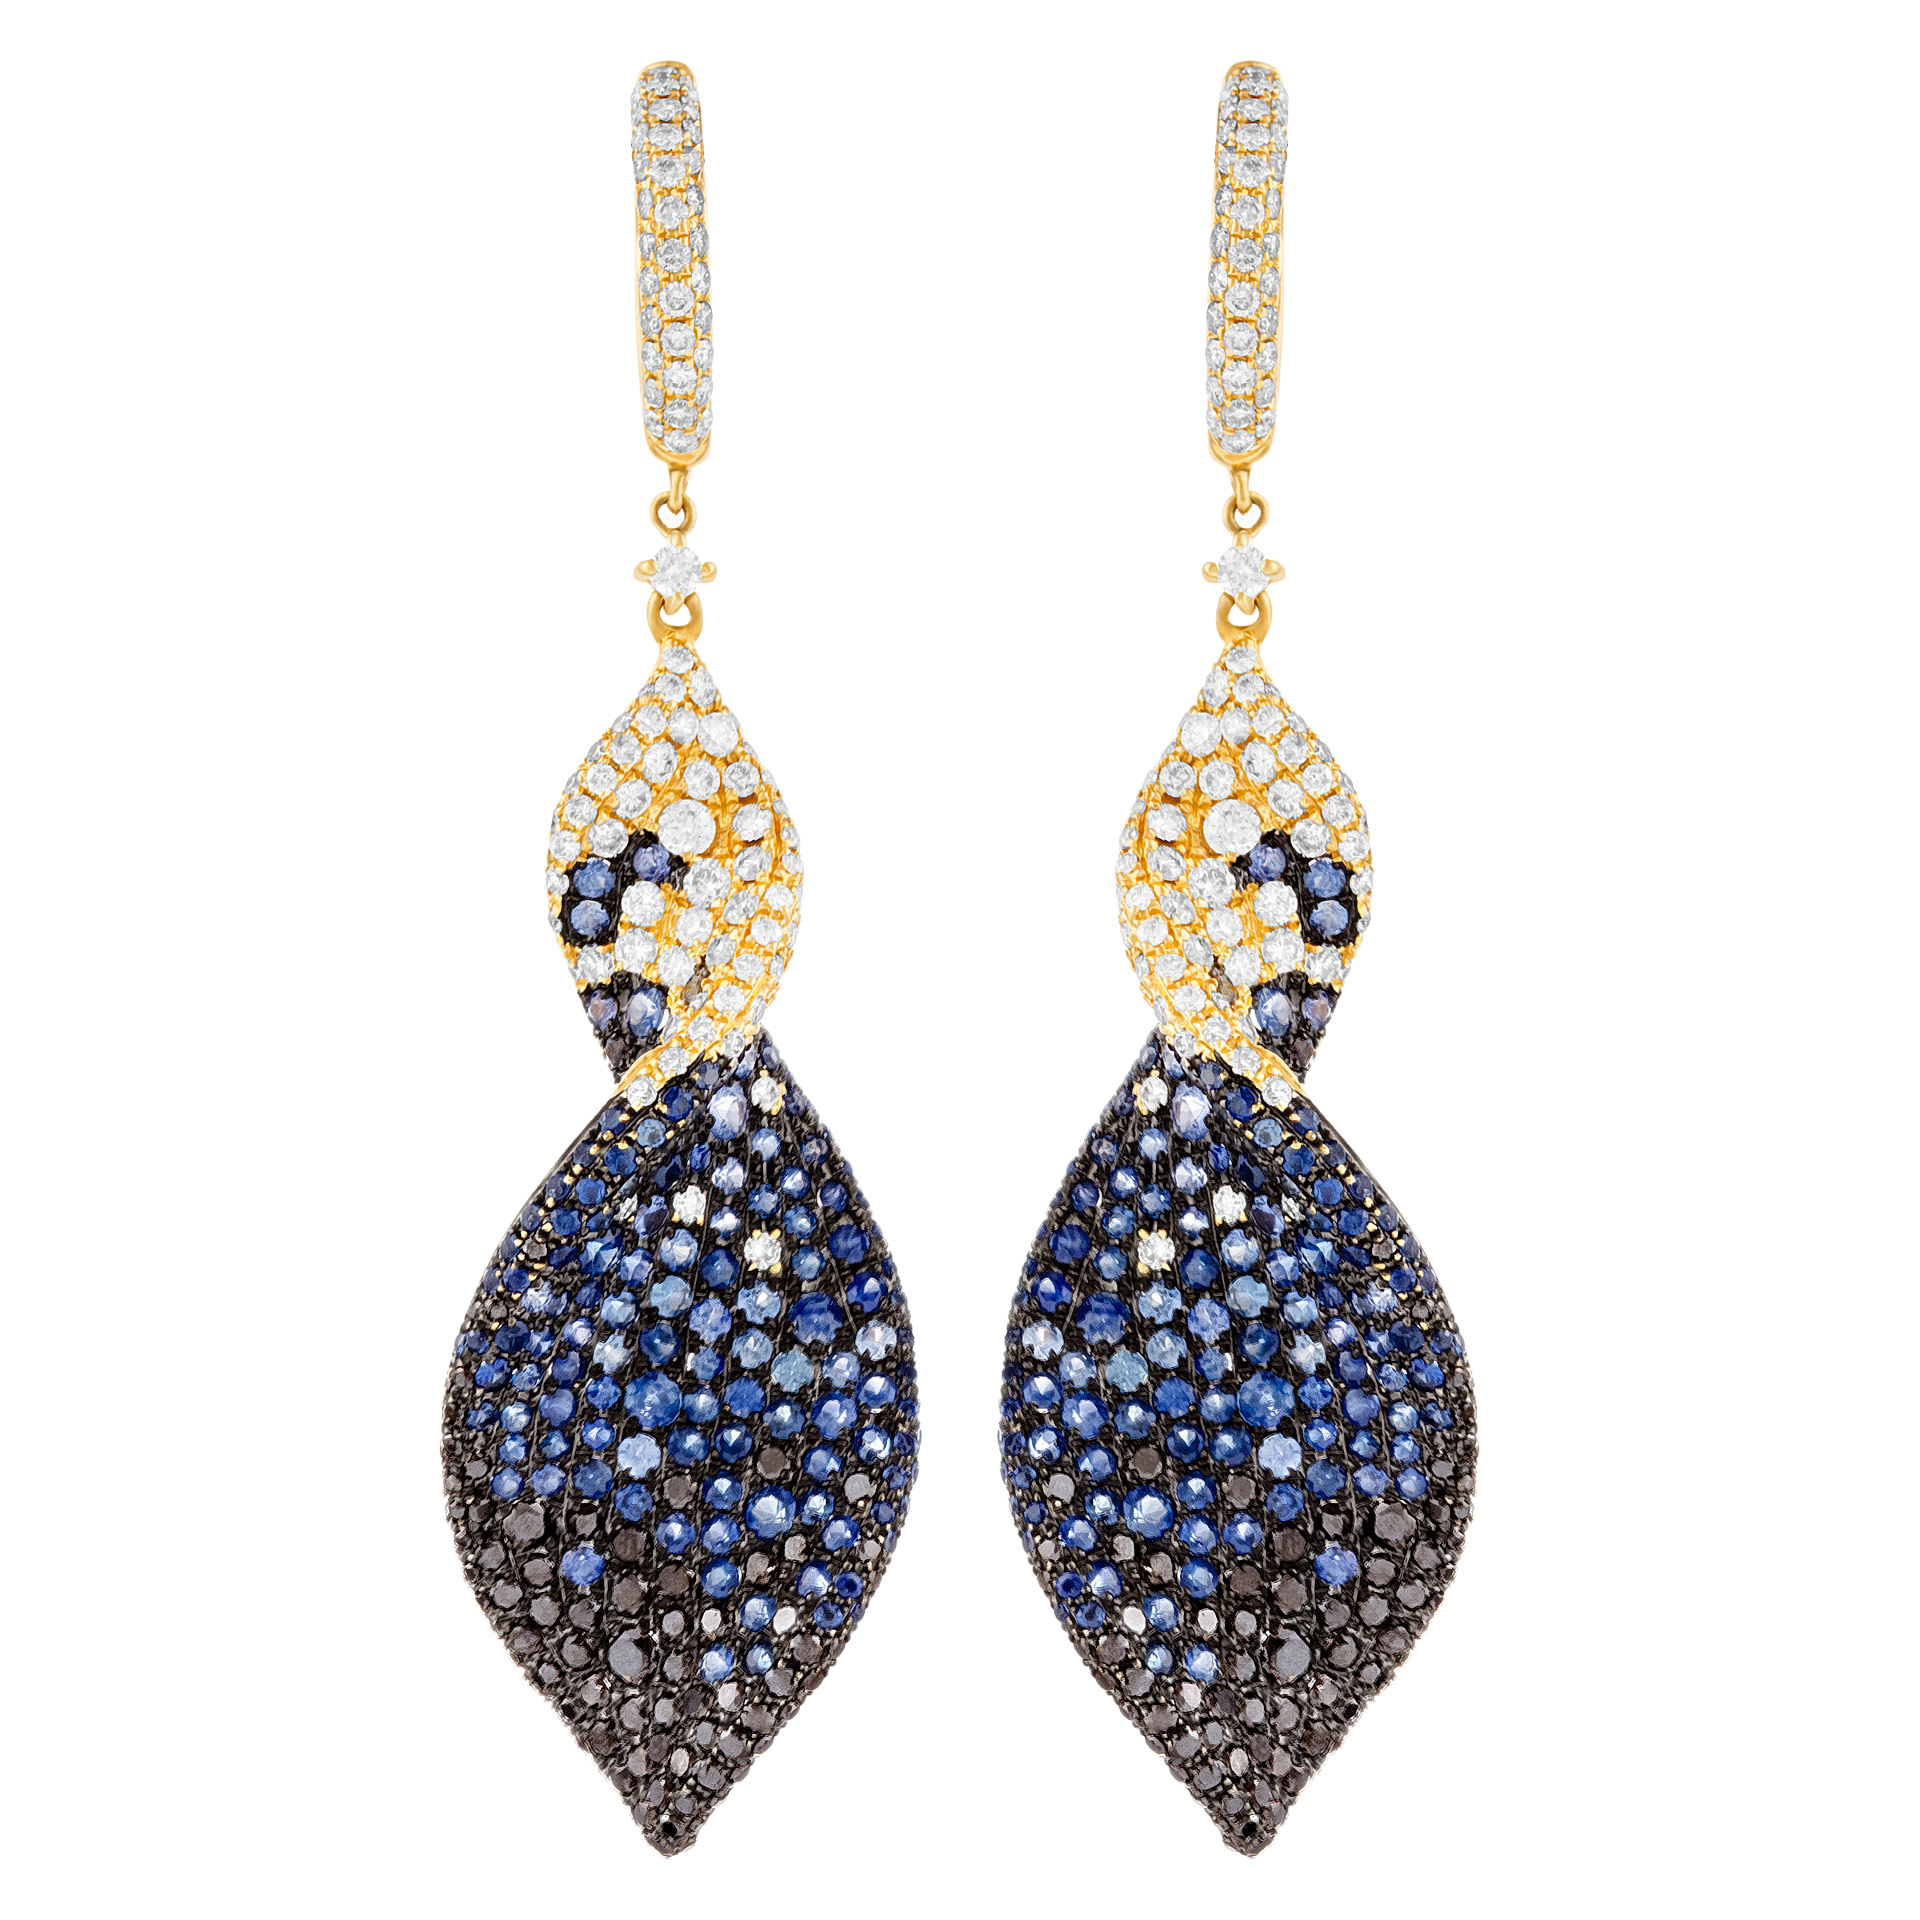 Swirled drop earrings in 18k with diamonds & sapphires image 1